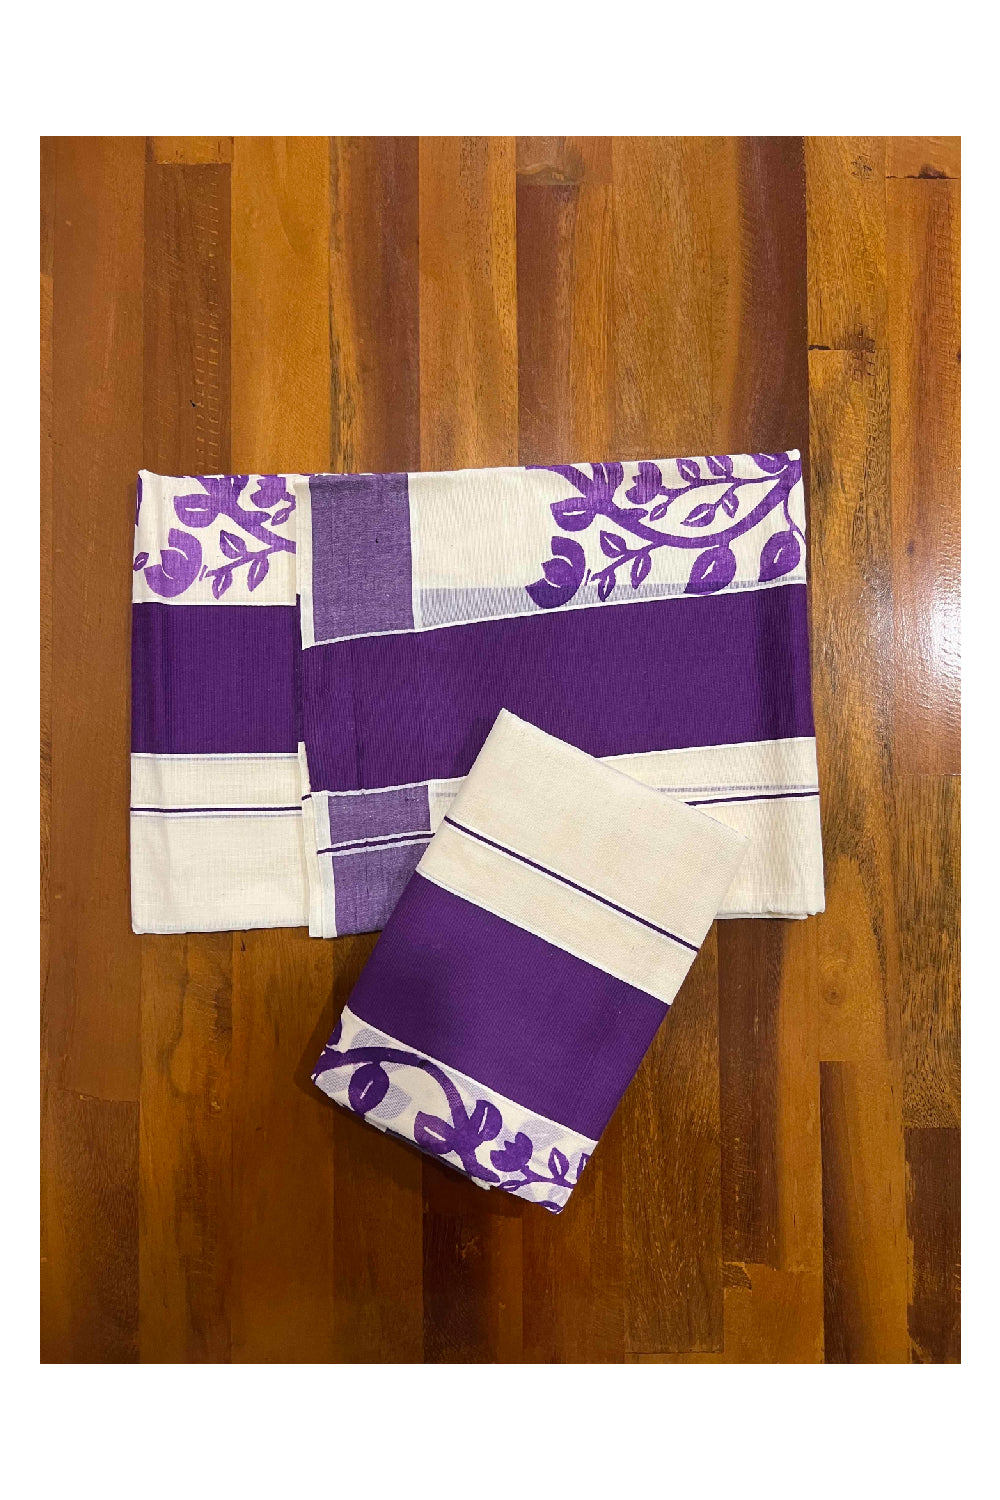 Southloom Original Design Single Set Mundu with Dark Violet Floral Vines Block Print (Mundum Neriyathum) 2.80 Mtrs